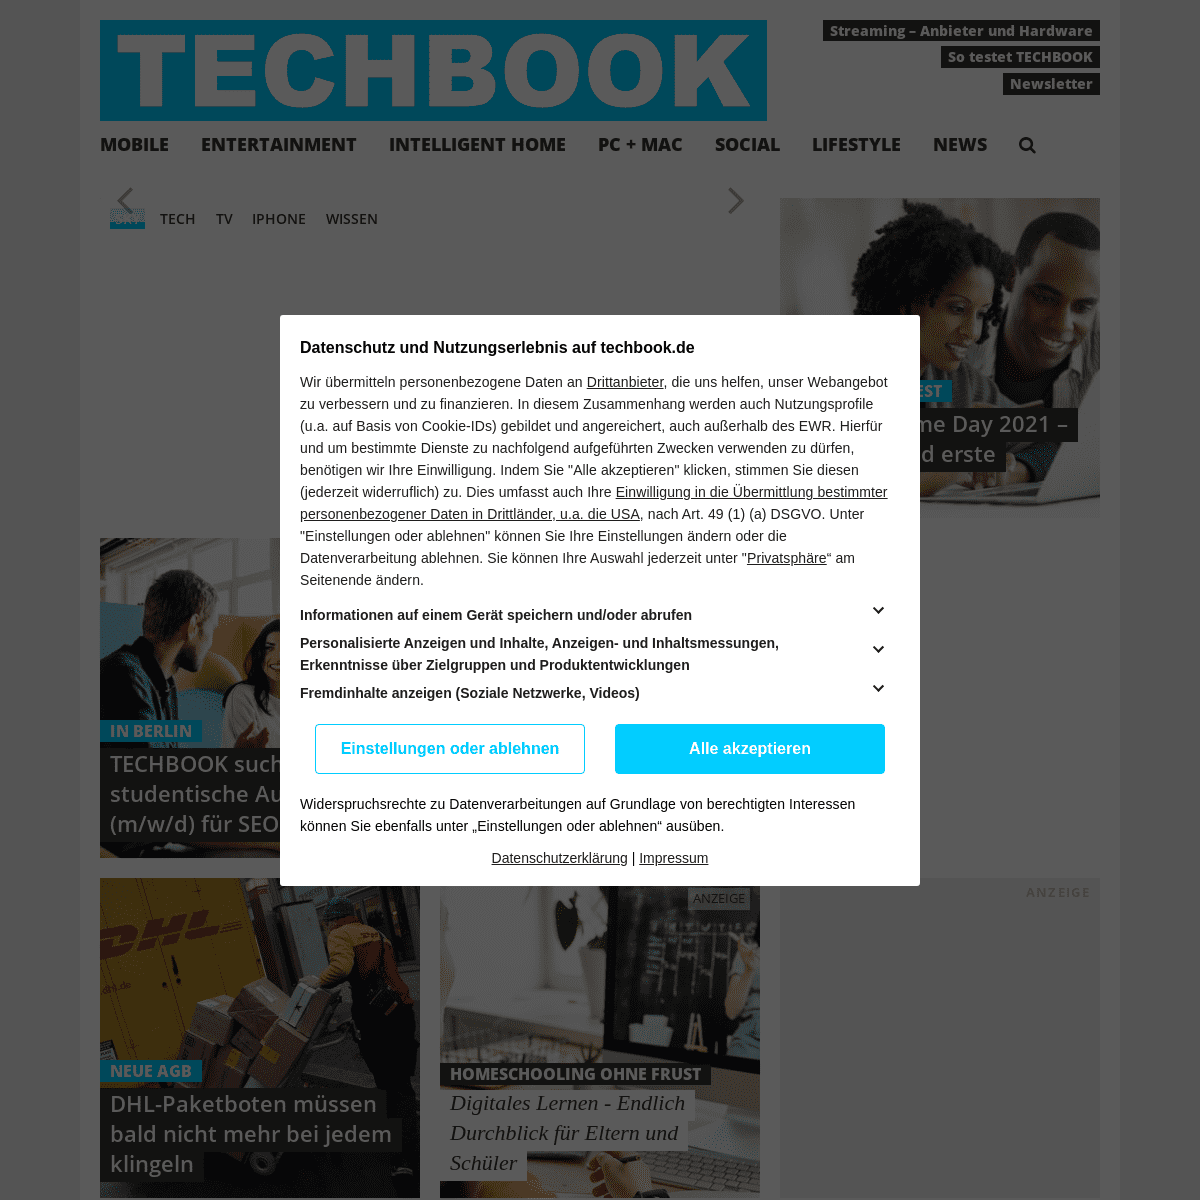 A complete backup of https://techbook.de